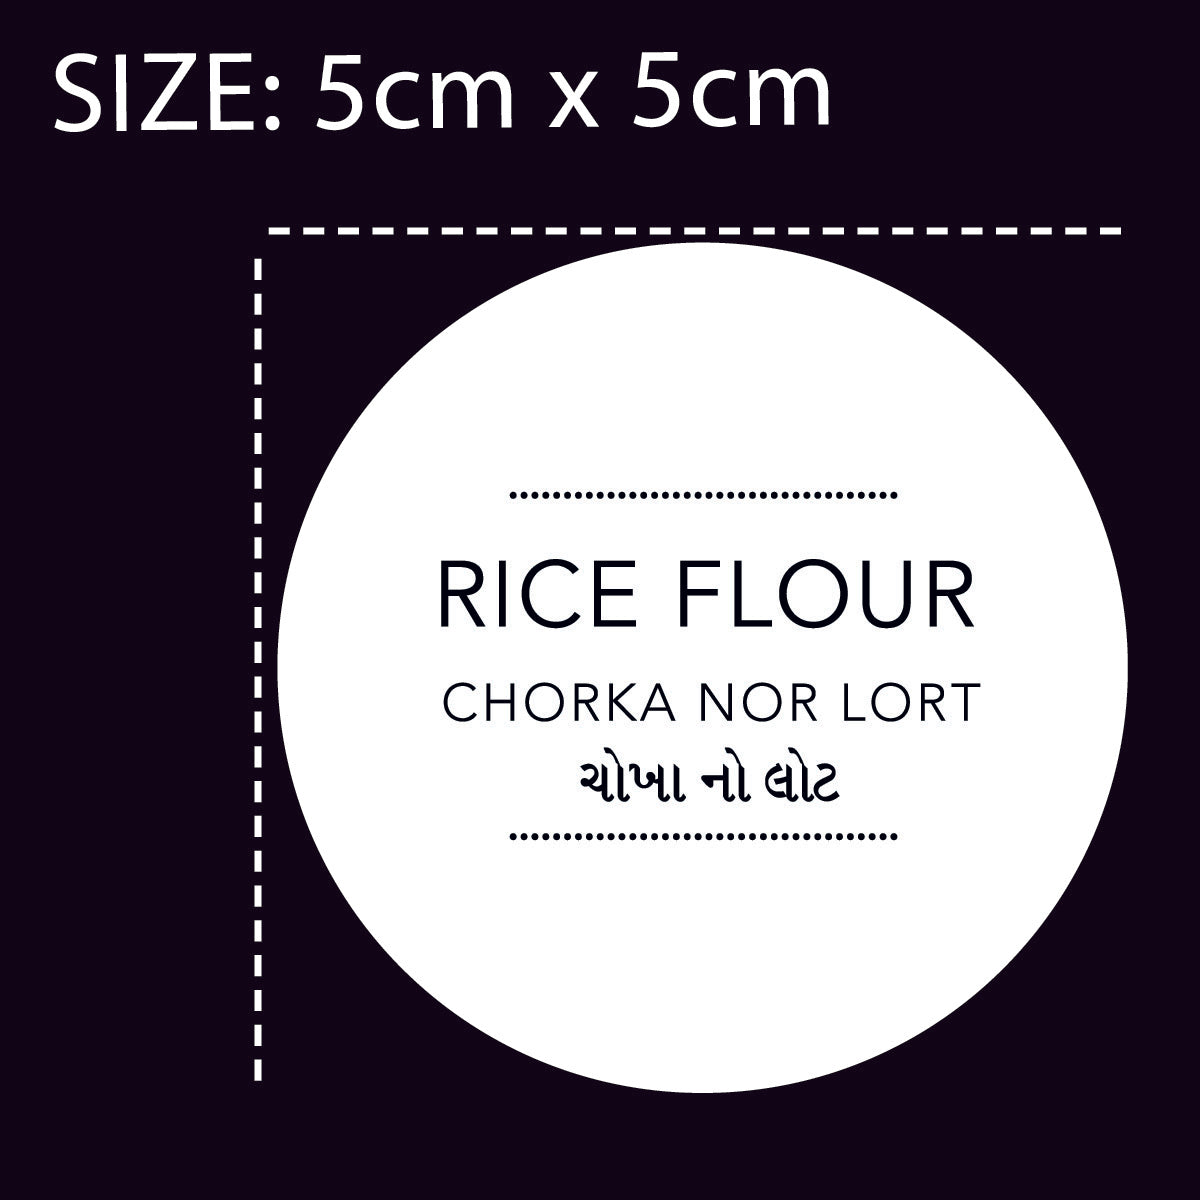 Gujarati English Pantry Labels